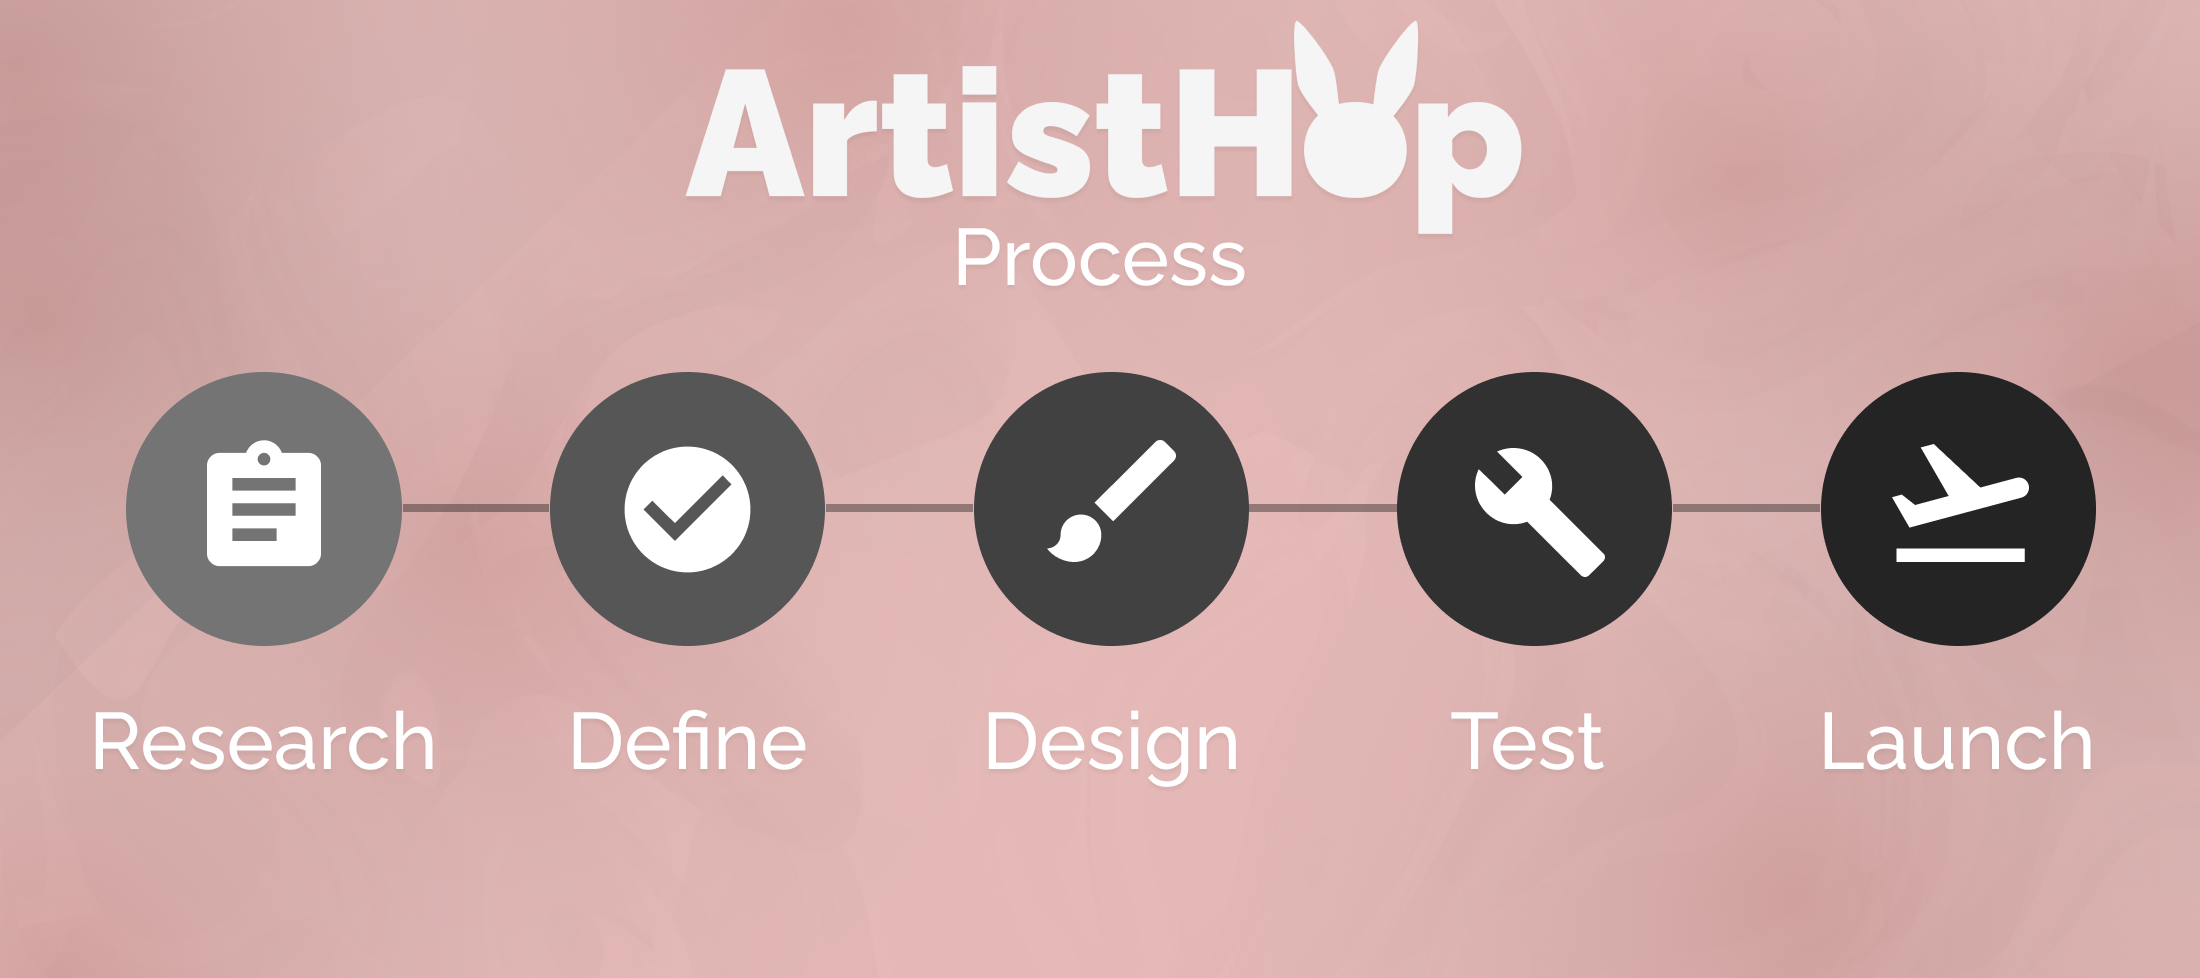 Process of creating ArtistHop